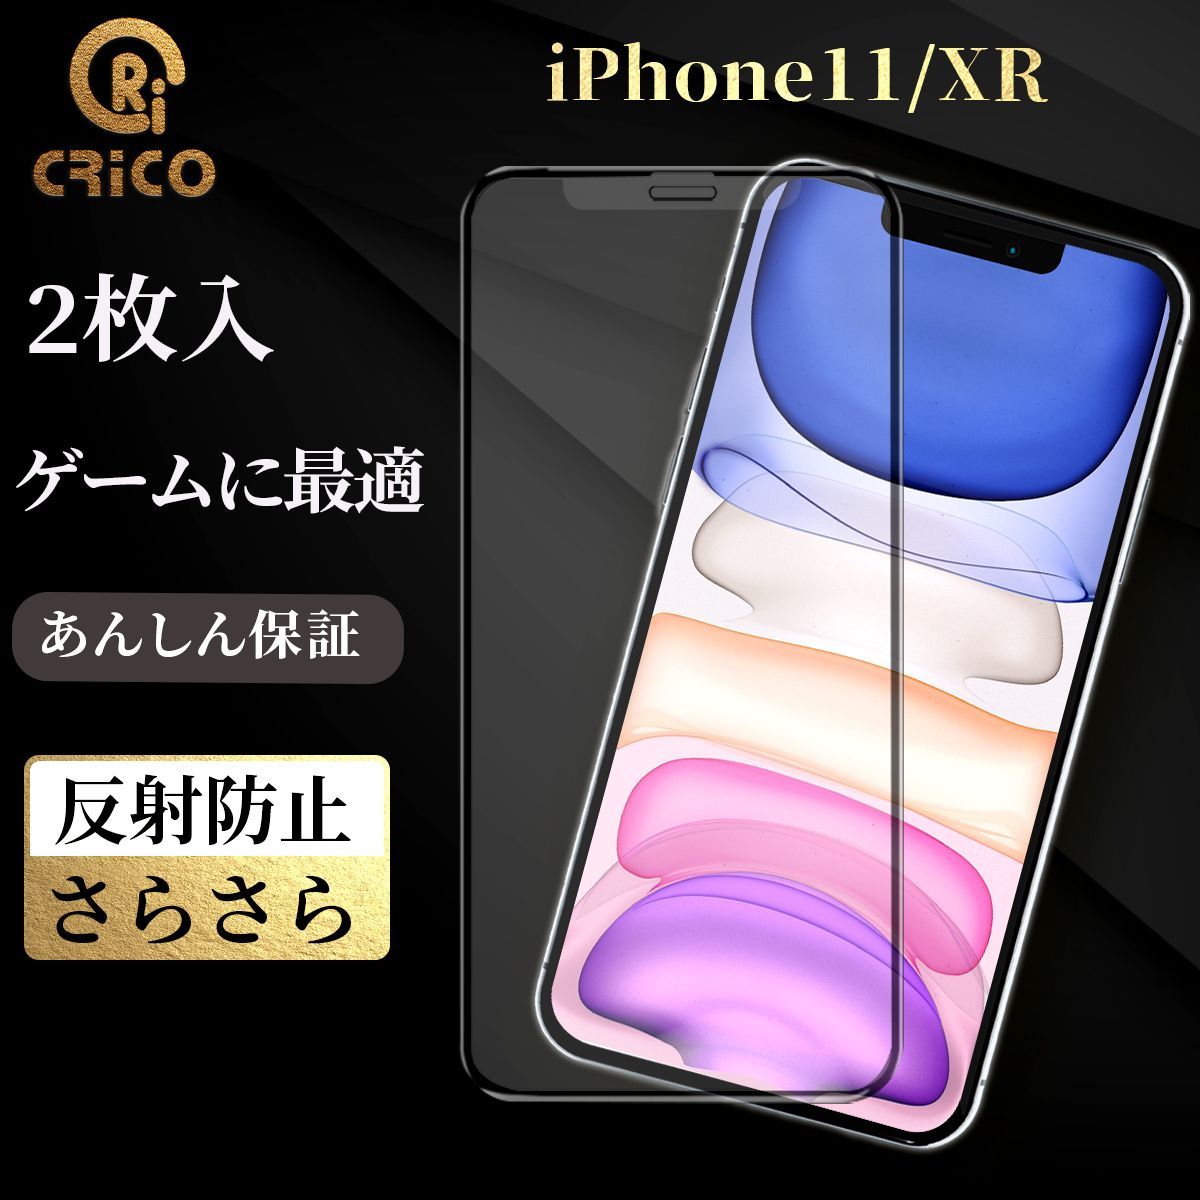 iPhone11 XR 10R 反射防止 アンチグレア強化ガラスフィルム マット